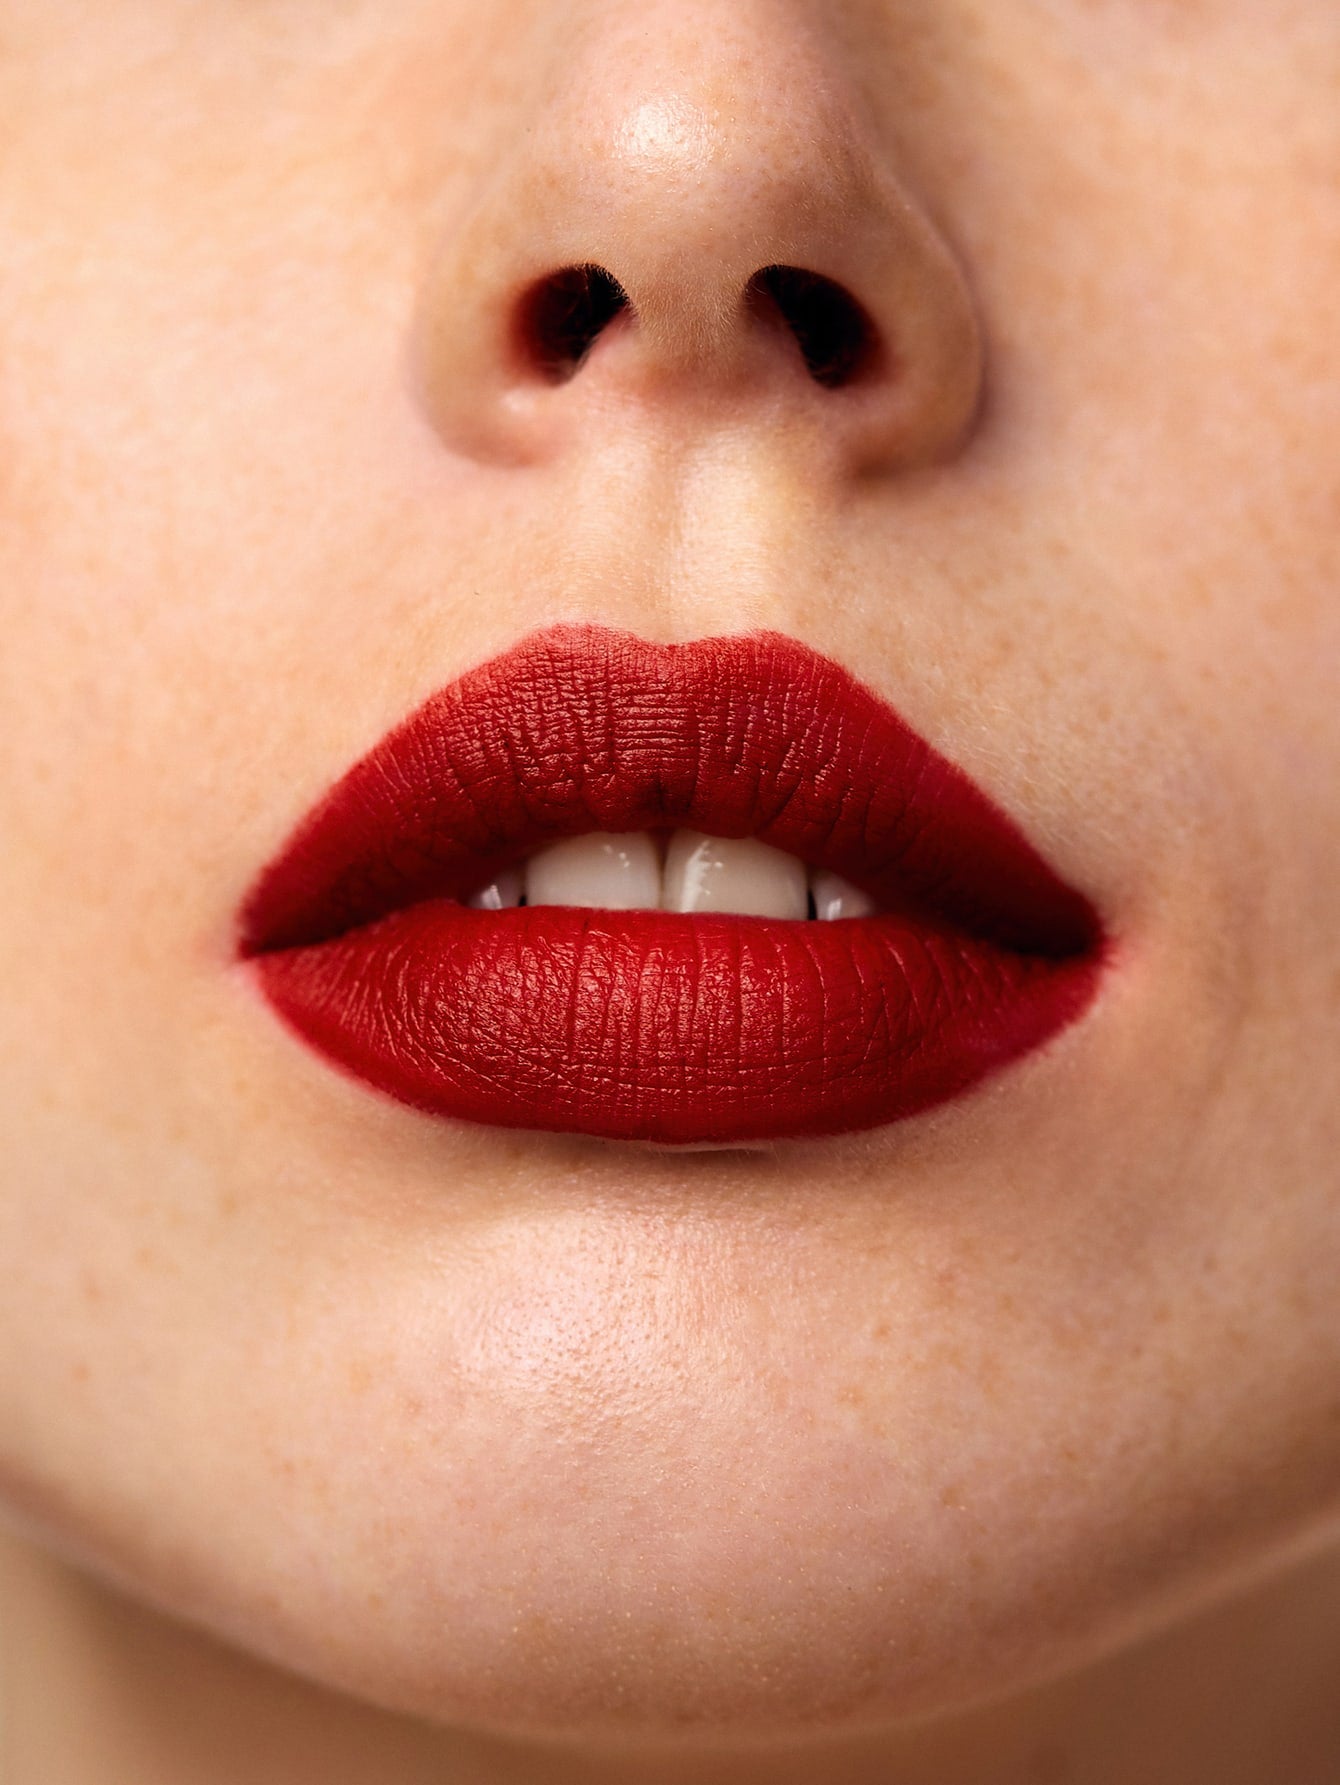 SHEGLAM SO Lippy Lip Liner Crimson